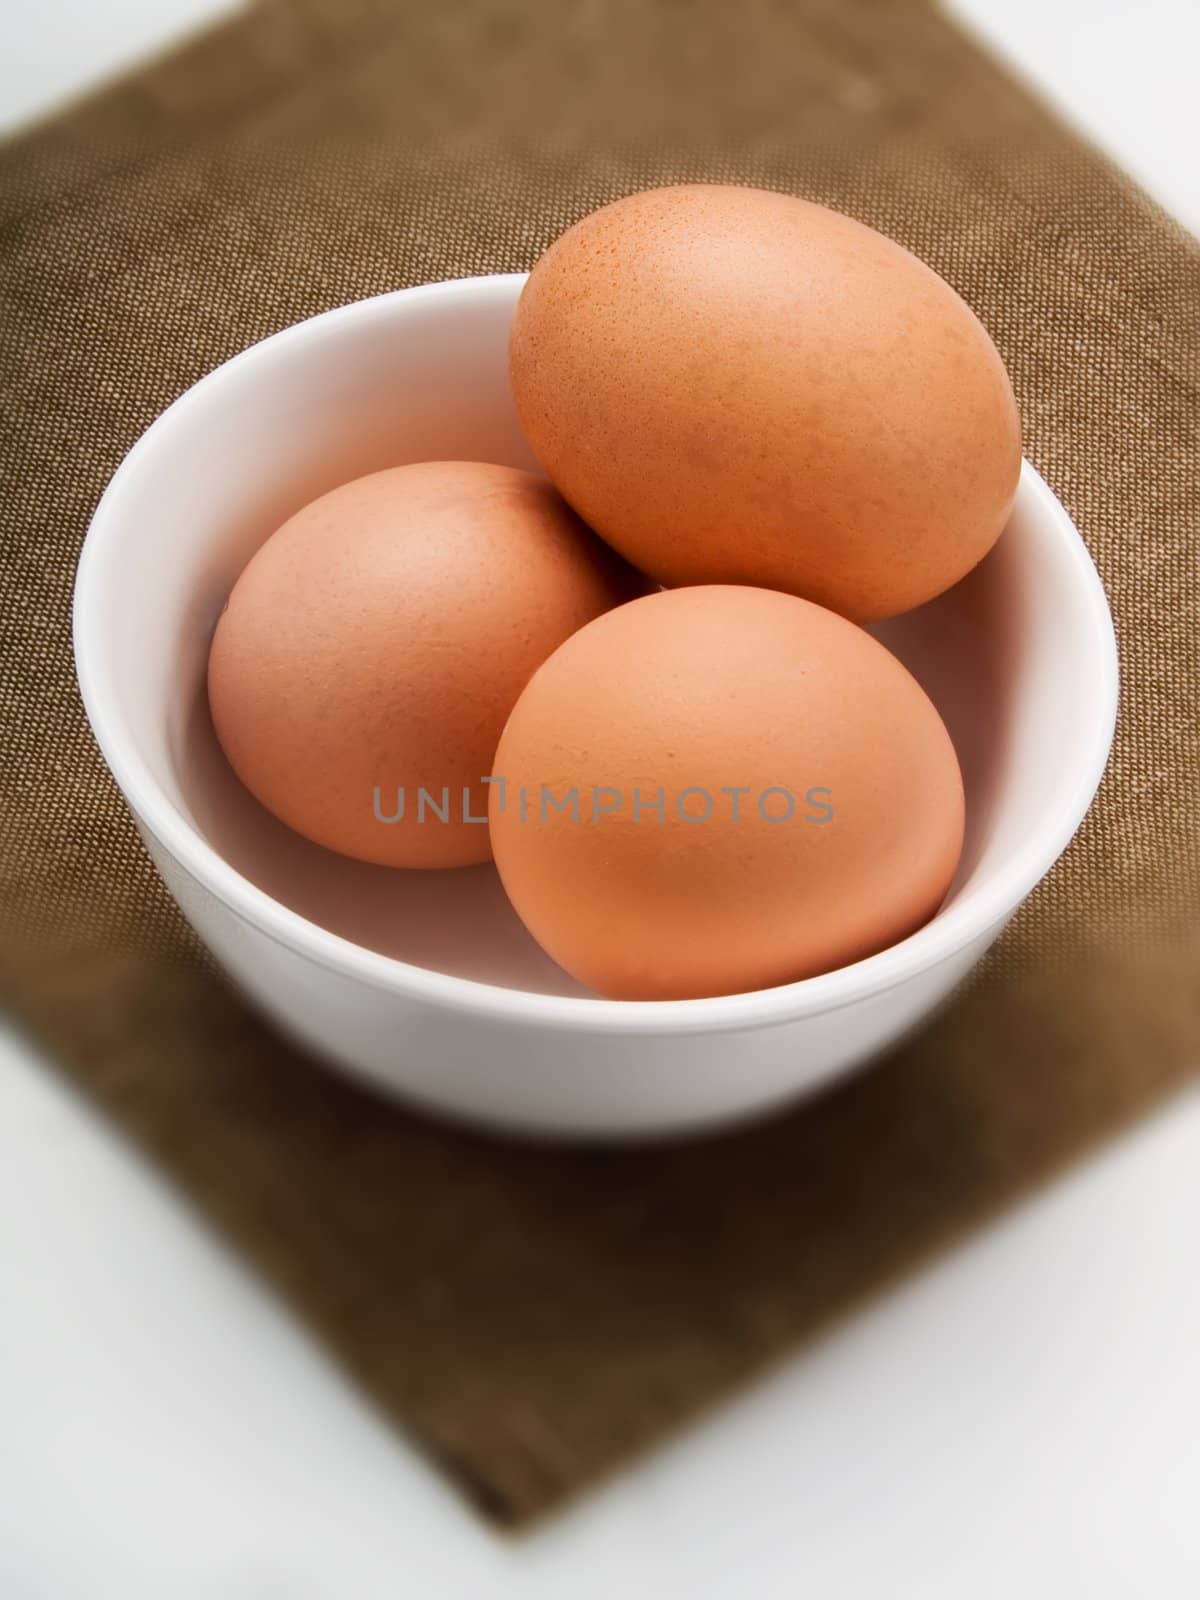 Three eggs in a white bowl